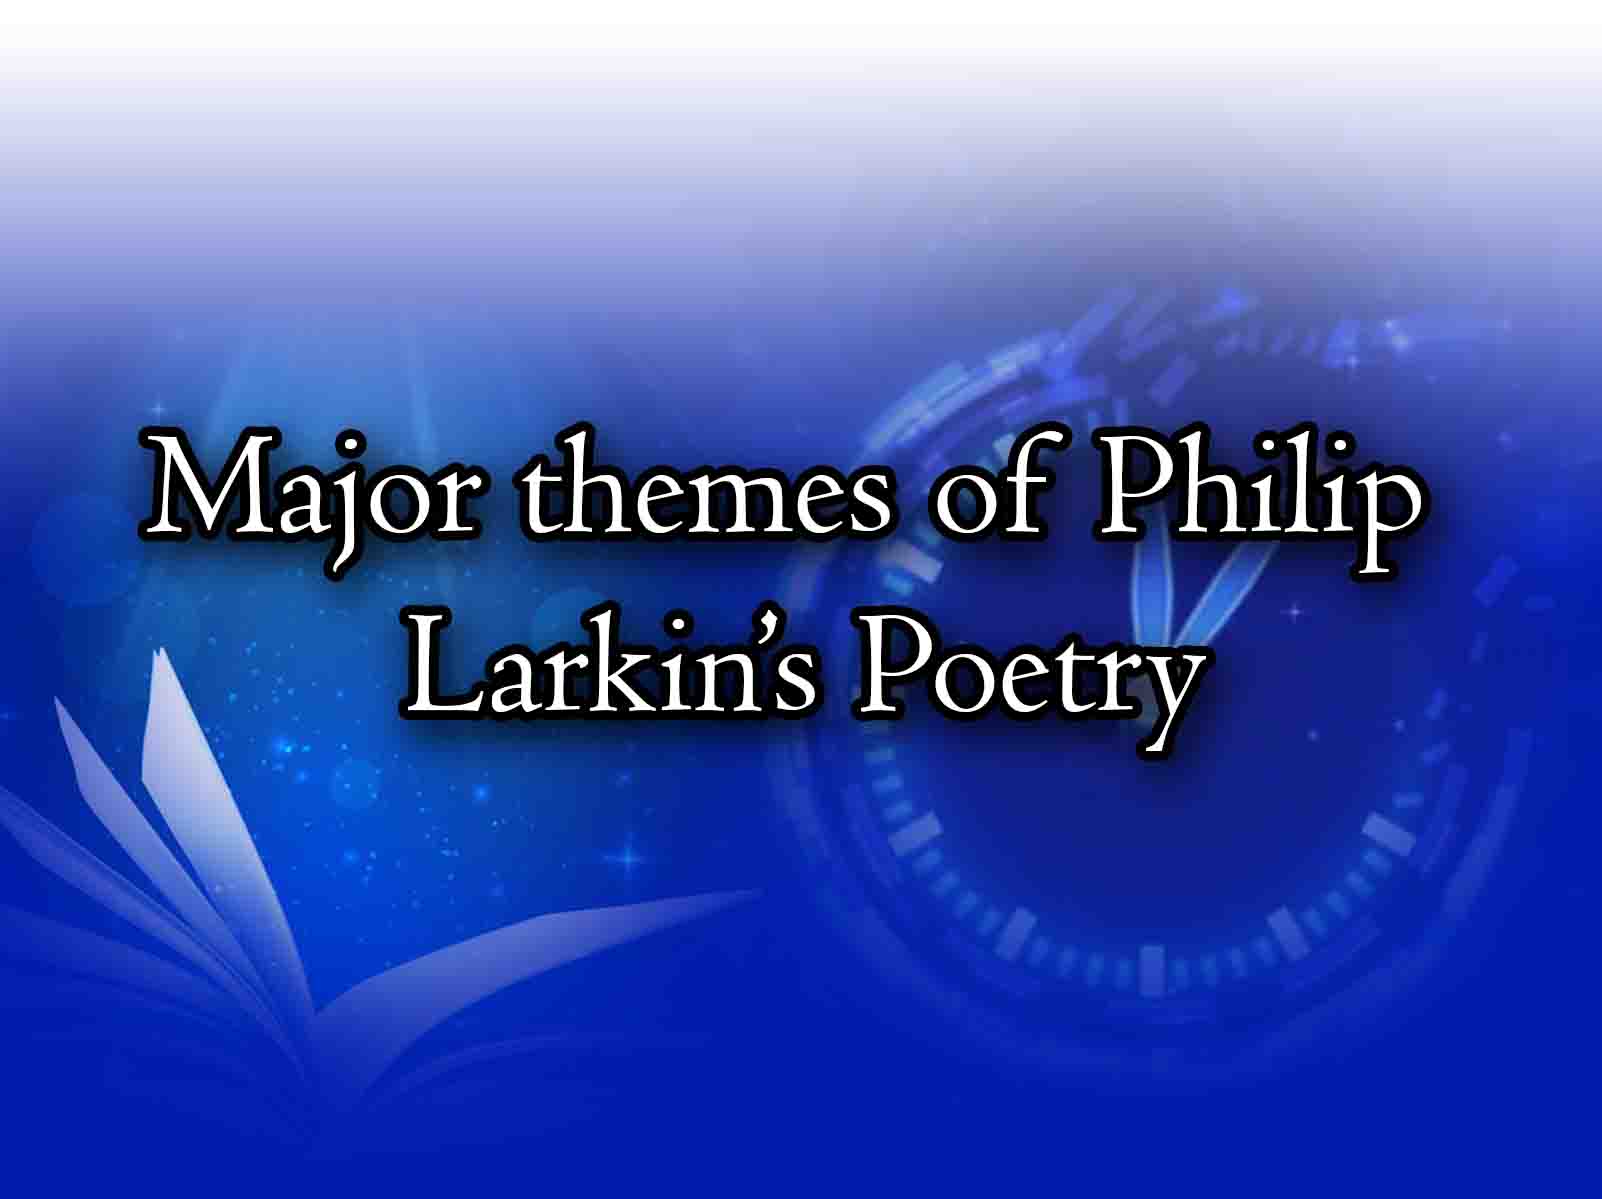 Major themes of Philip Larkin’s Poetry